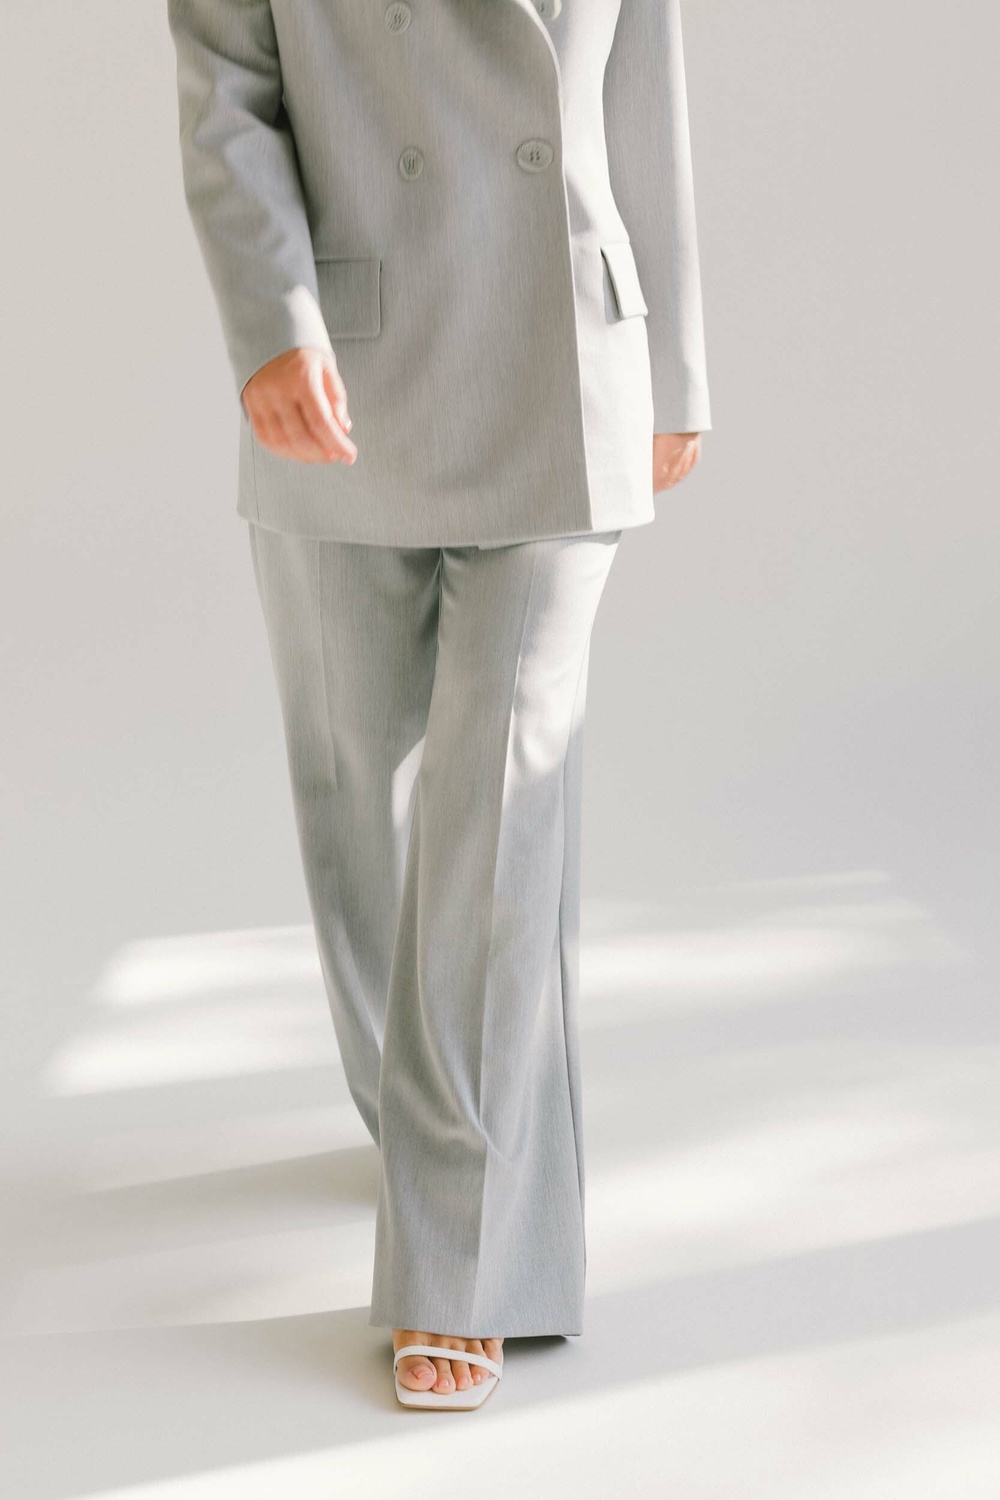 Suit in men's style